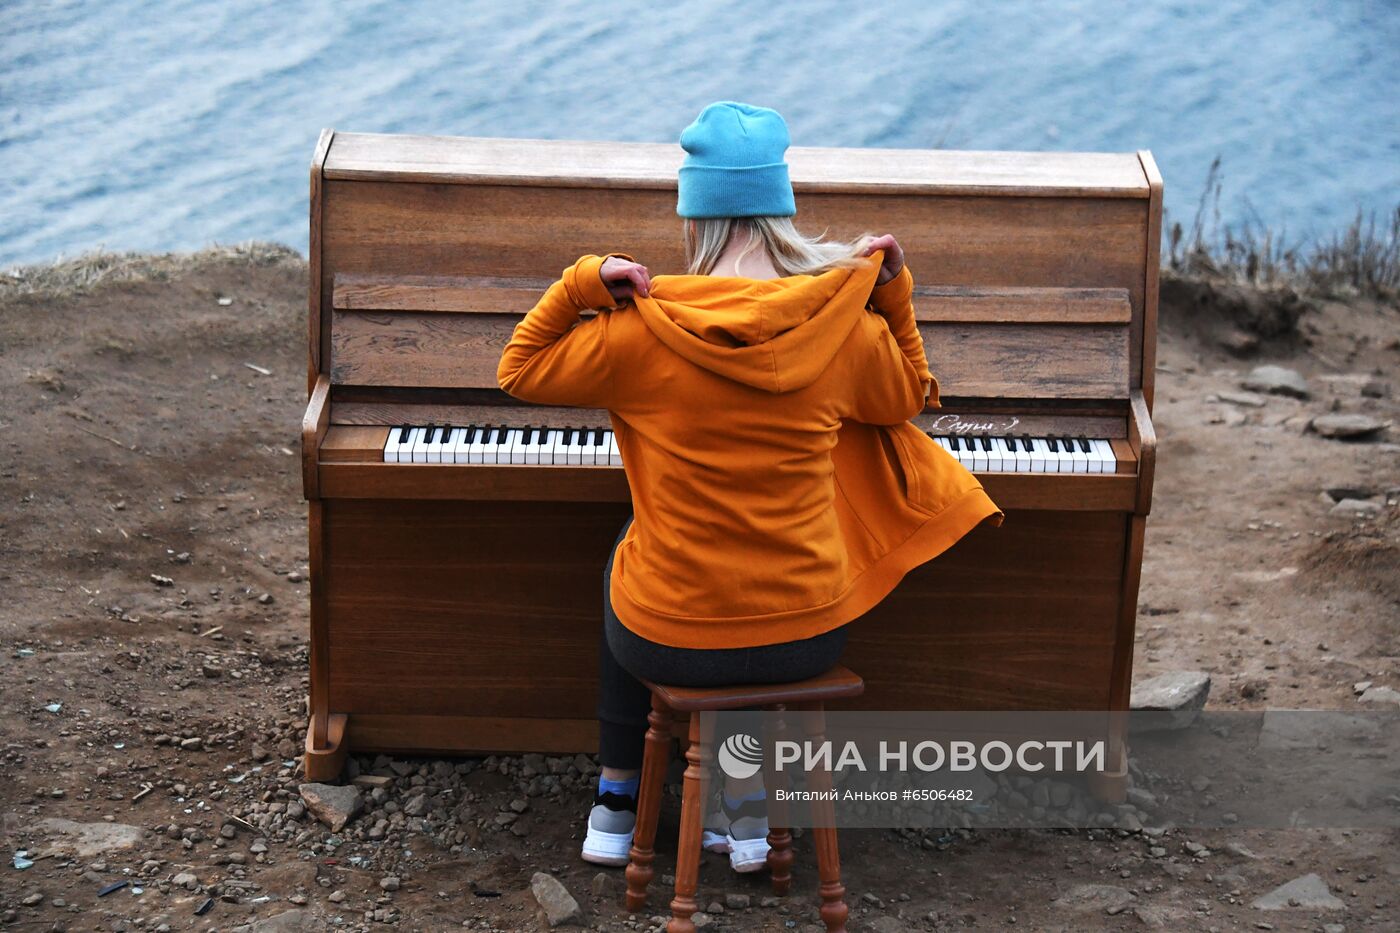 Пианино на берегу острова Русский